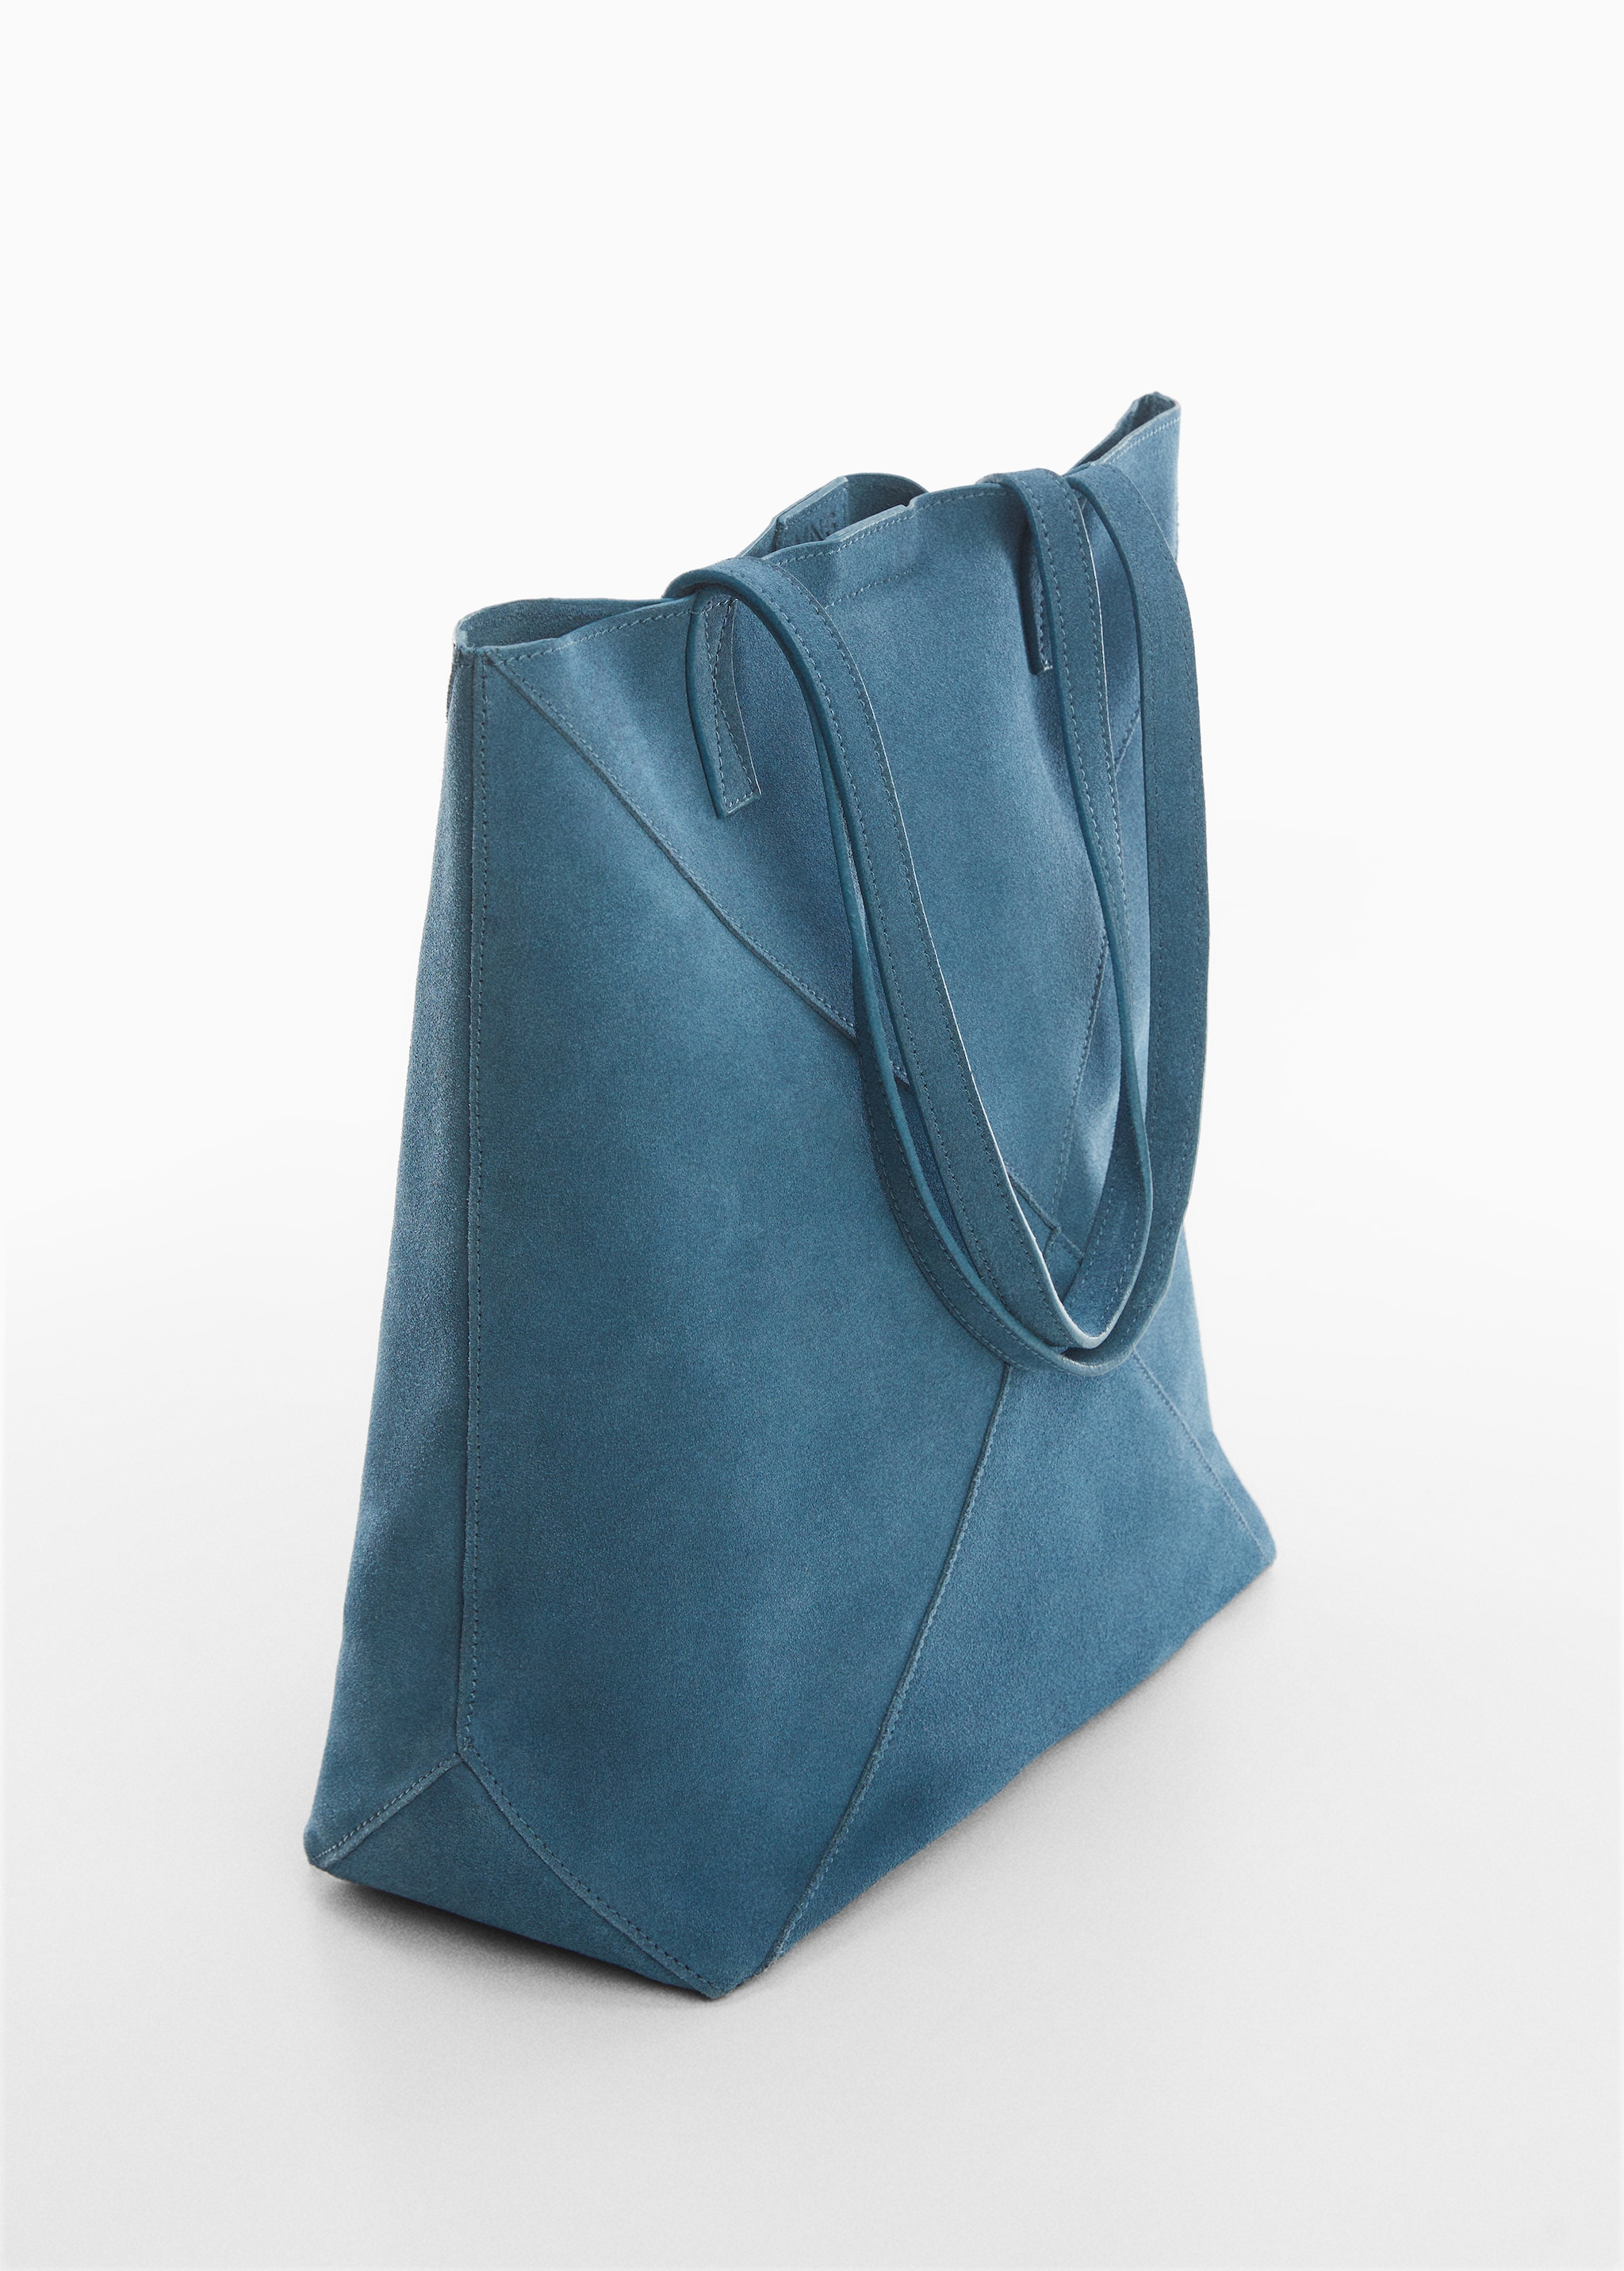 Leather shopper bag - Medium plane